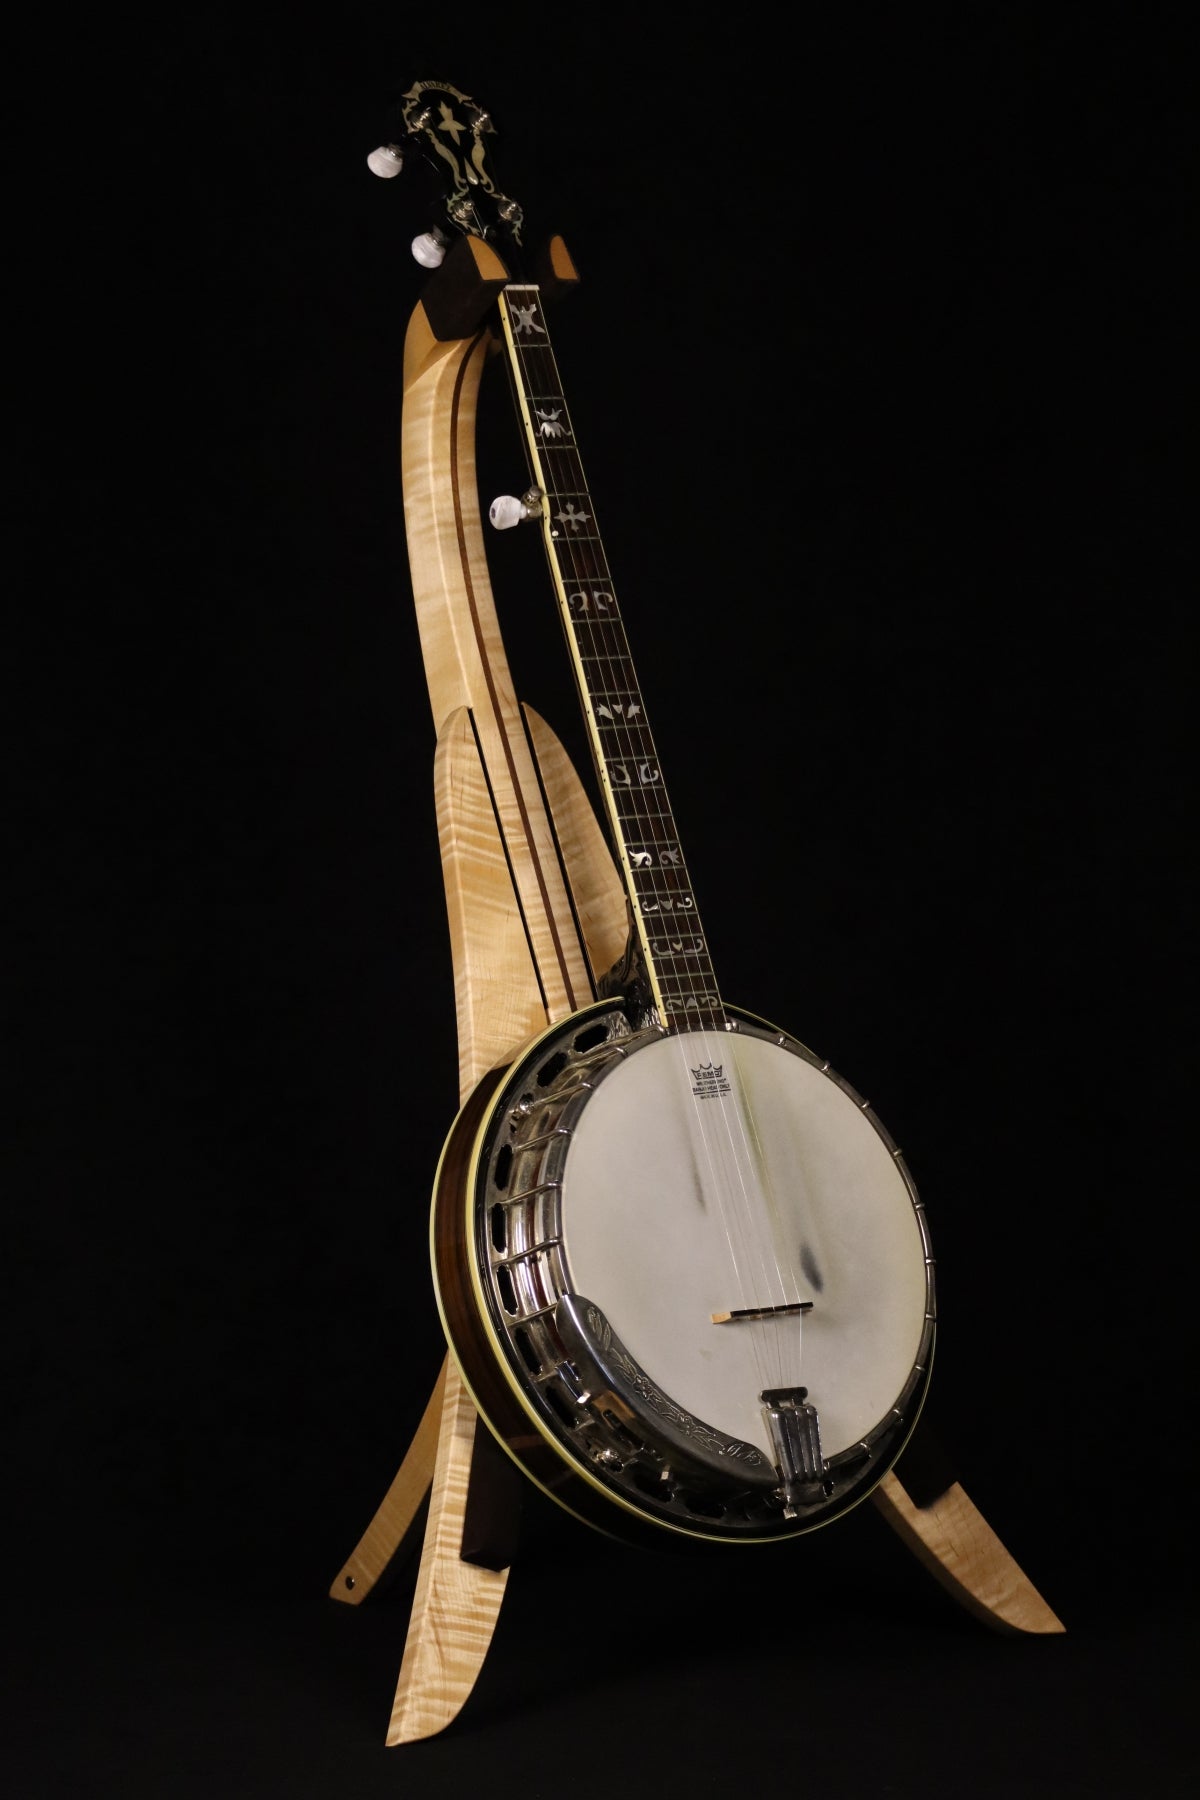 Folding curly maple and walnut wood banjo floor stand full front image with Alvarez banjo